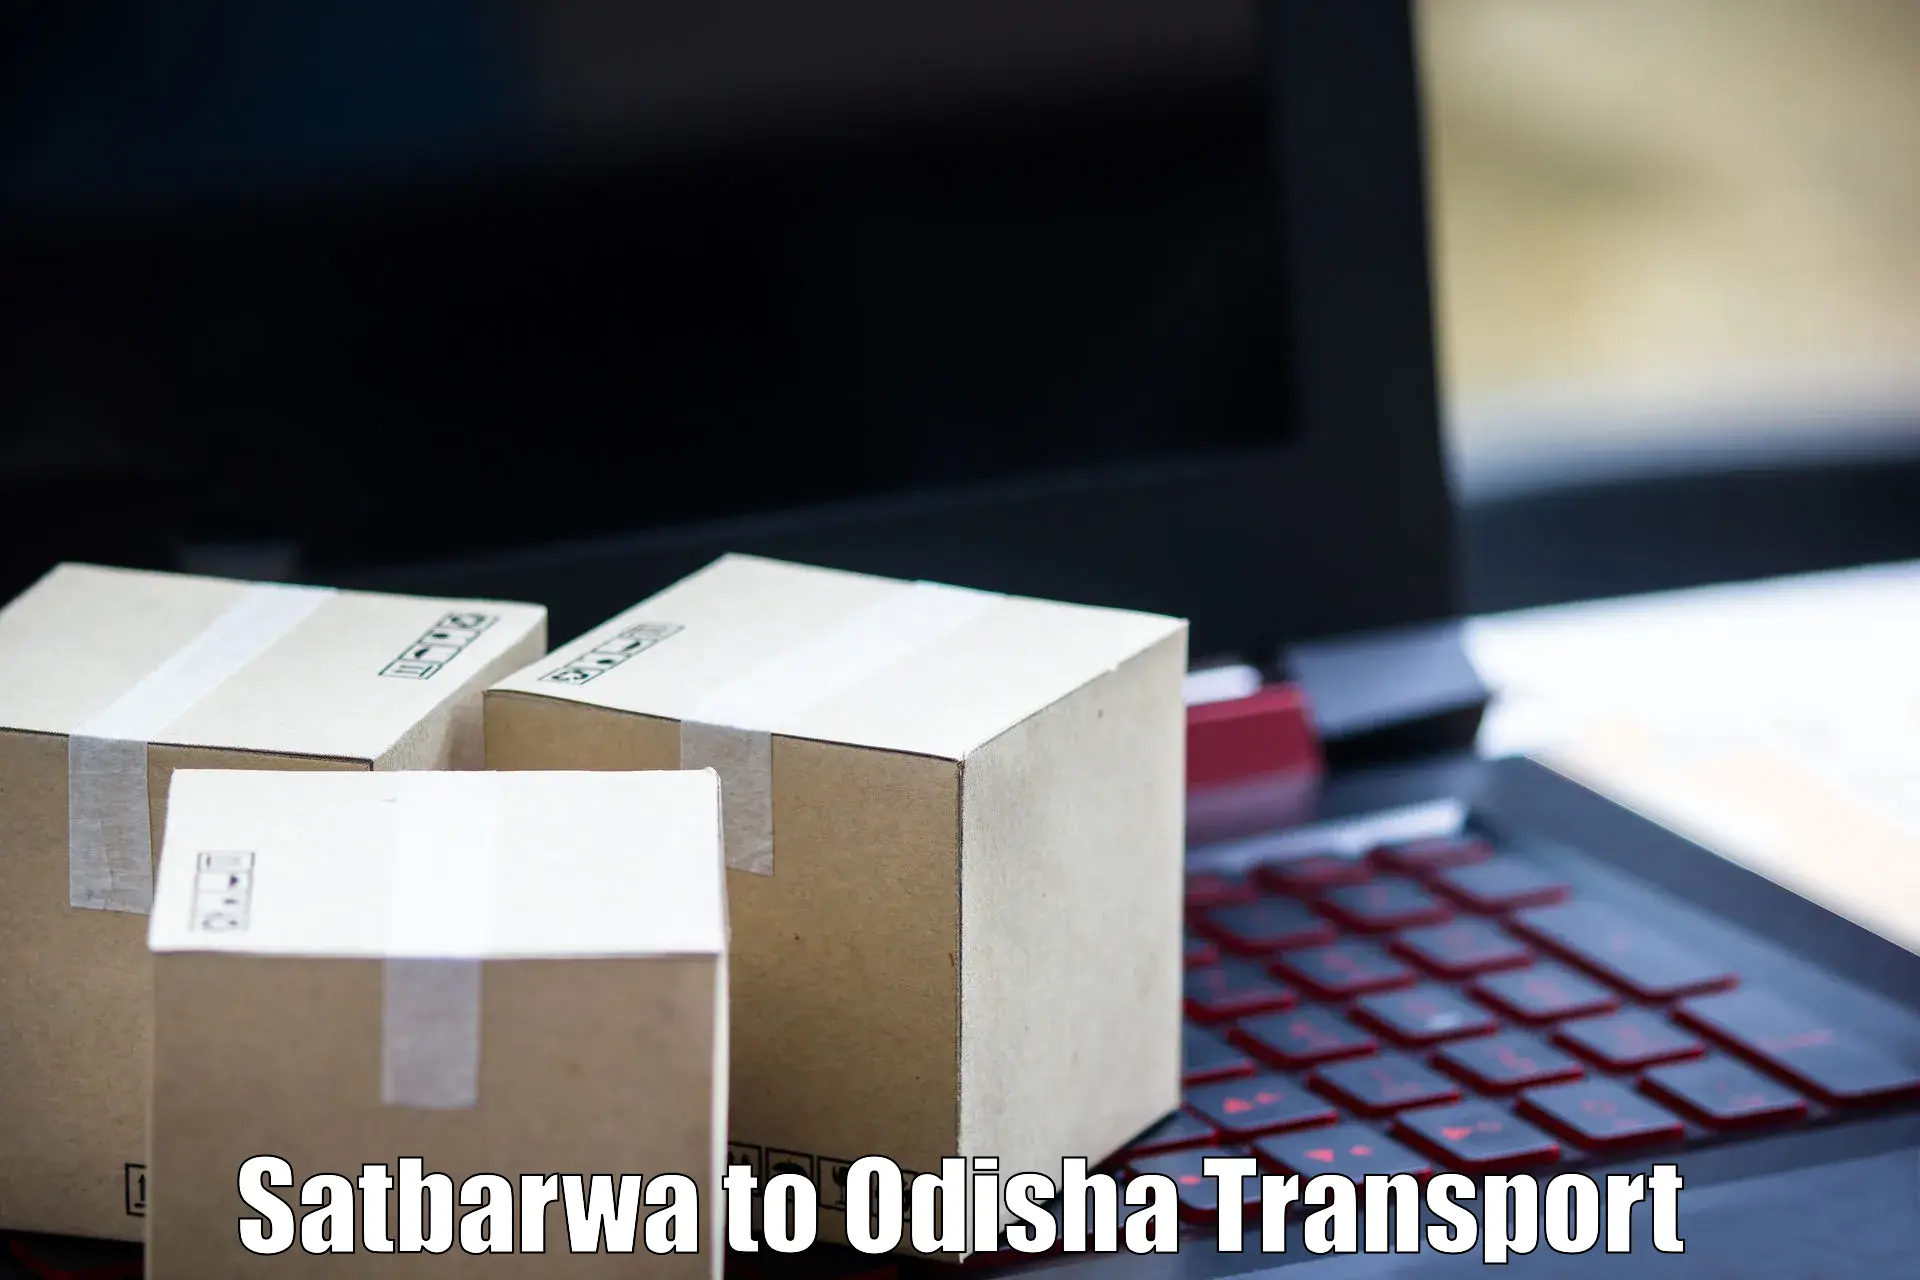 Furniture transport service Satbarwa to Loisingha